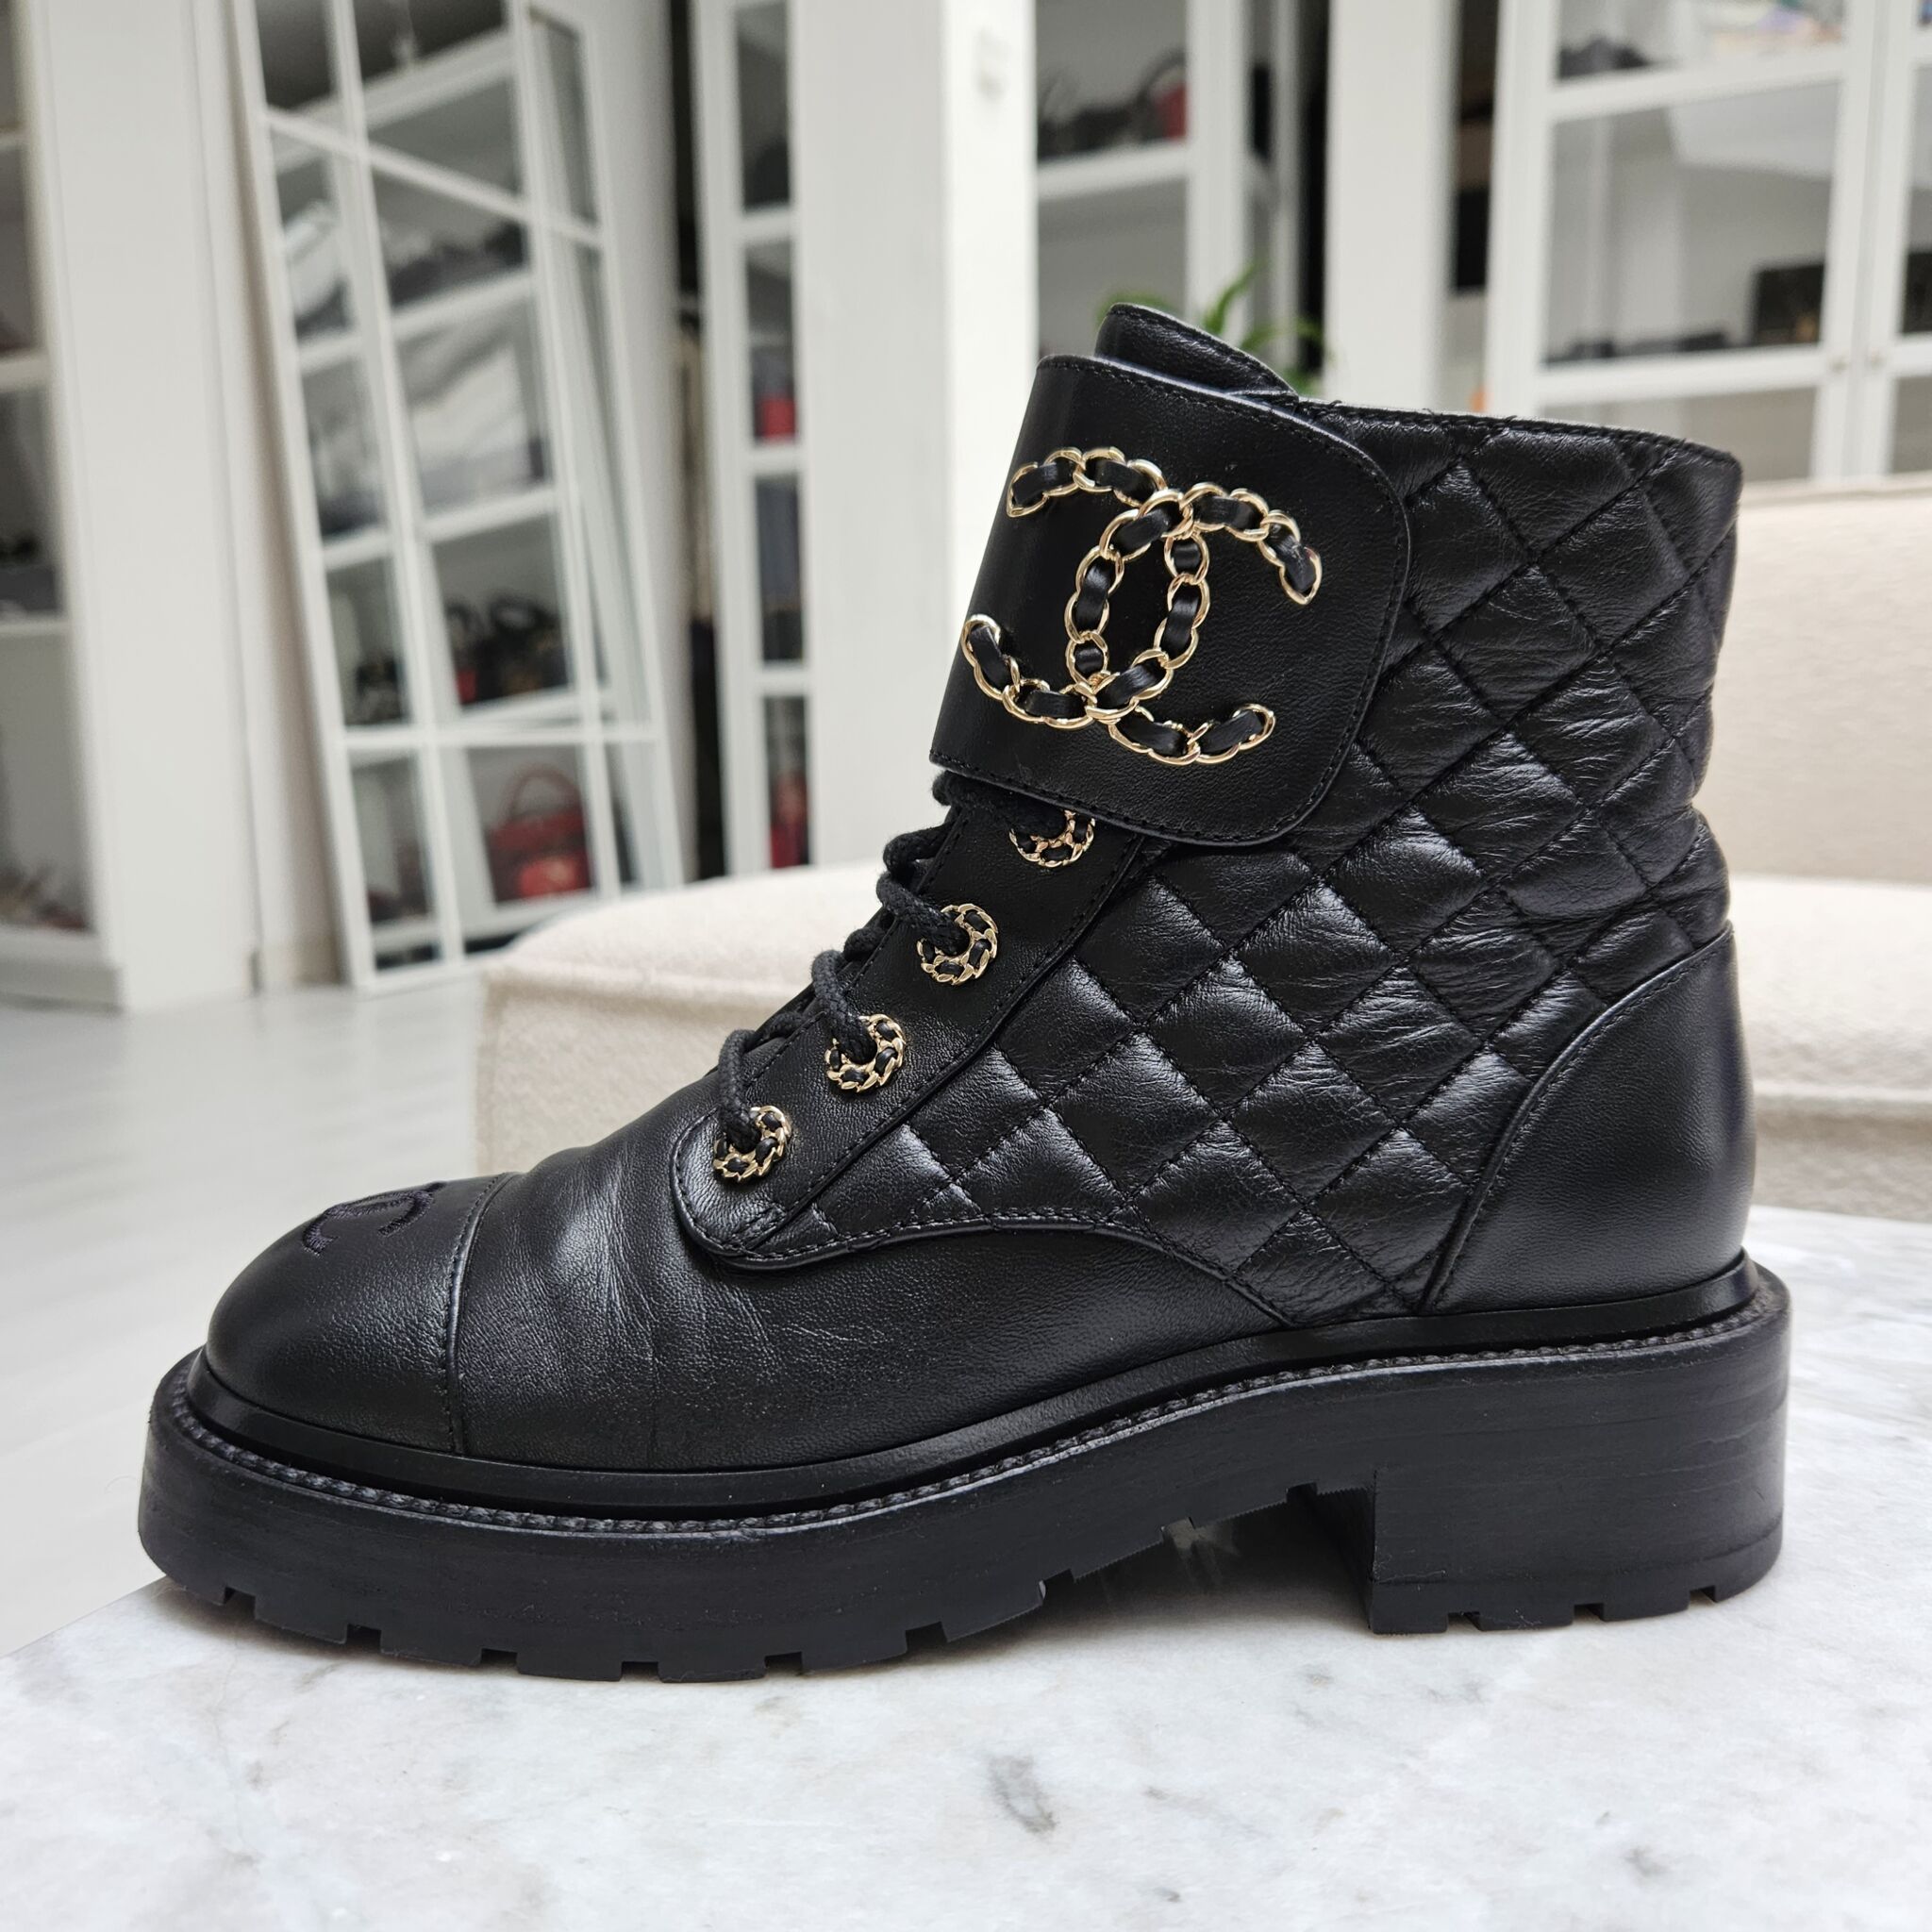 Chanel Combat Boots, Calfskin, Black GHW, 36.5 - Laulay Luxury